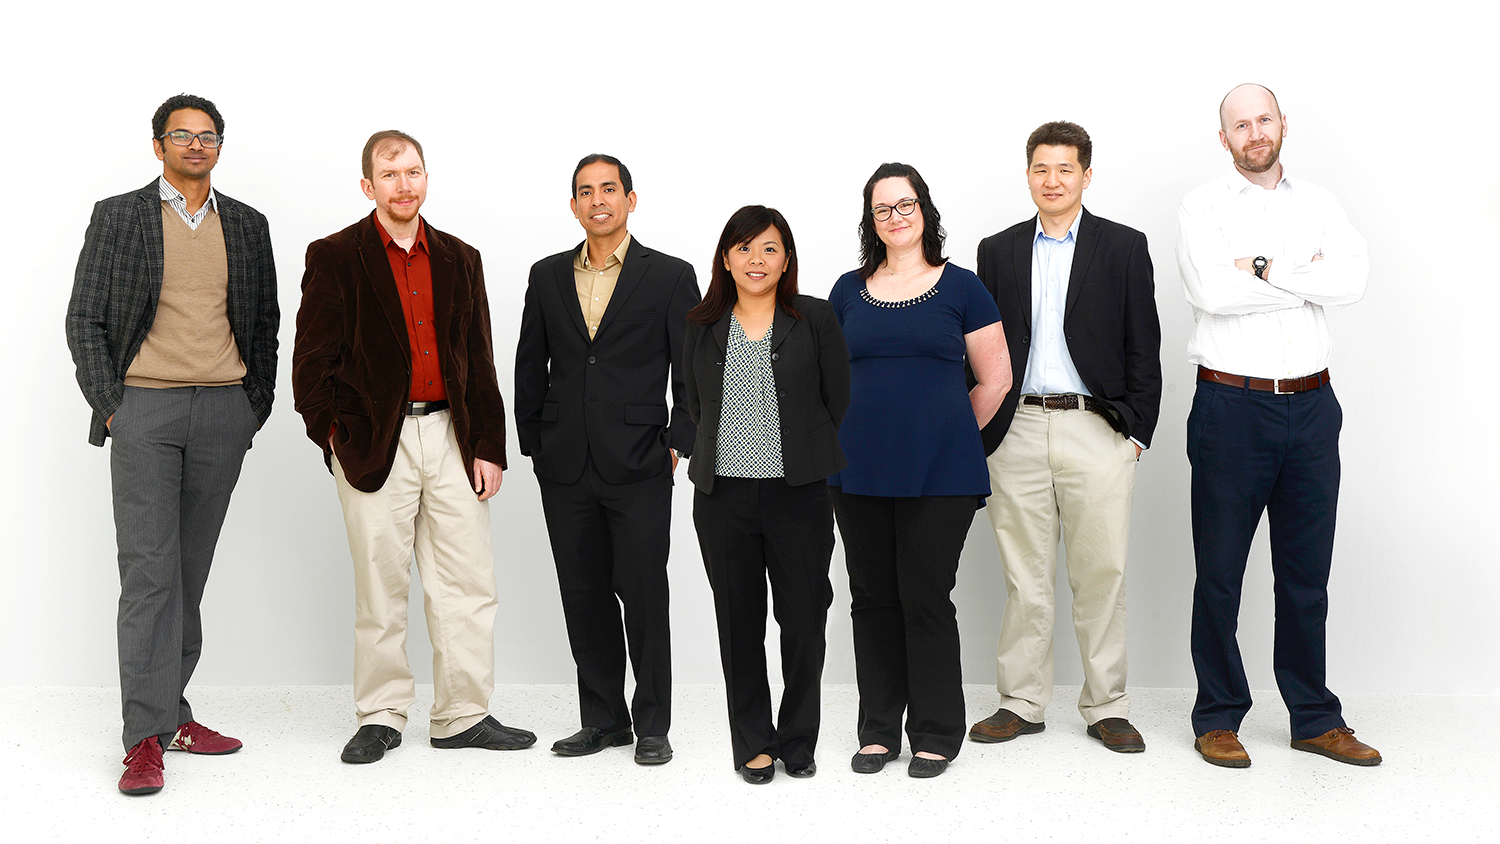 From left, Drs. Srikanth Patala, Alper Bozkurt, Edgar Lobaton, Hsiao-Ying Shadow Huang, Brina Montoya, Chih-Hao Chang, and Brendan O’Connor